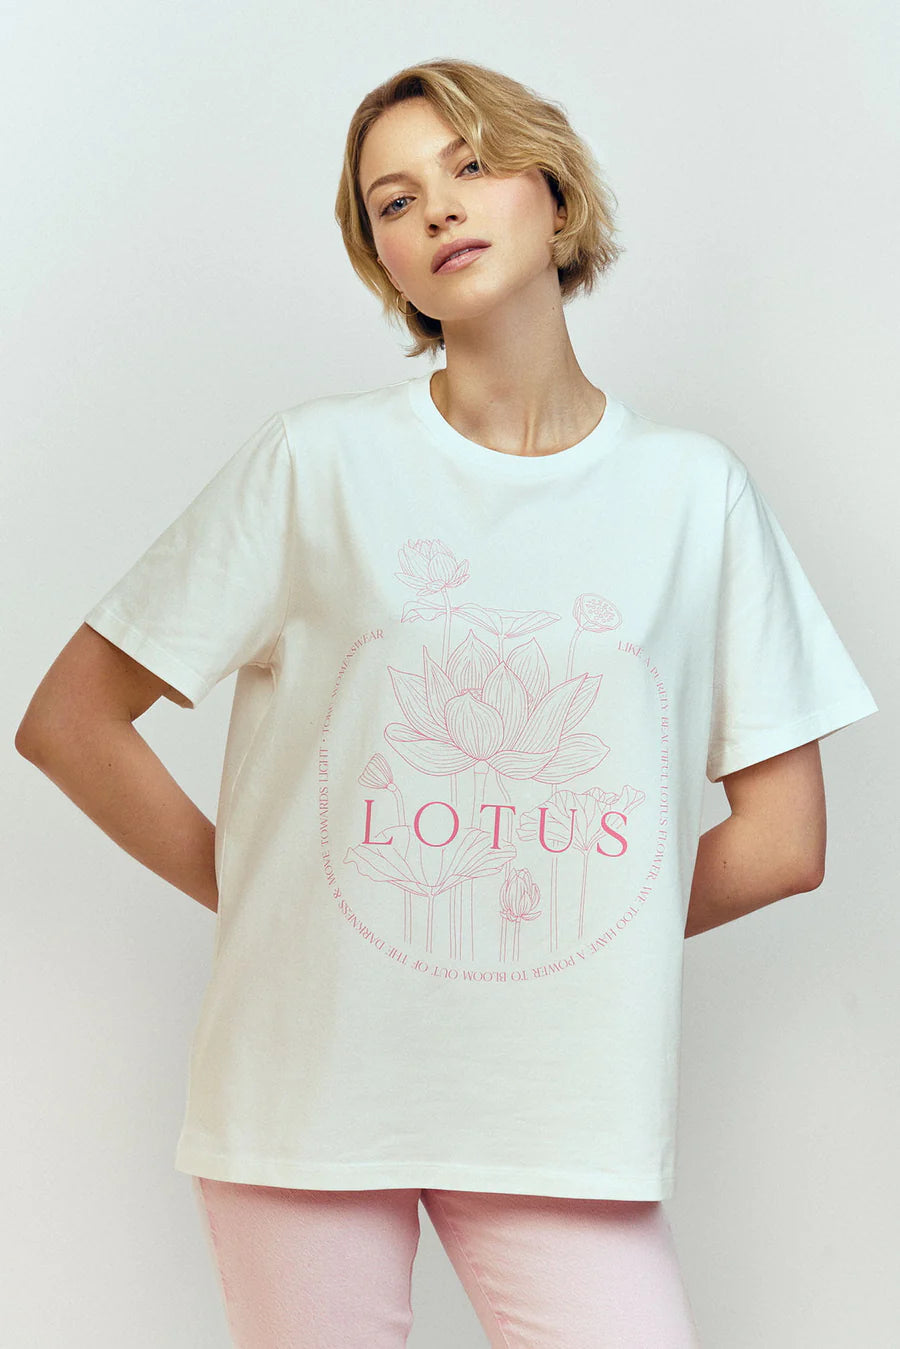 Les Goodies - Lotus T-shirt